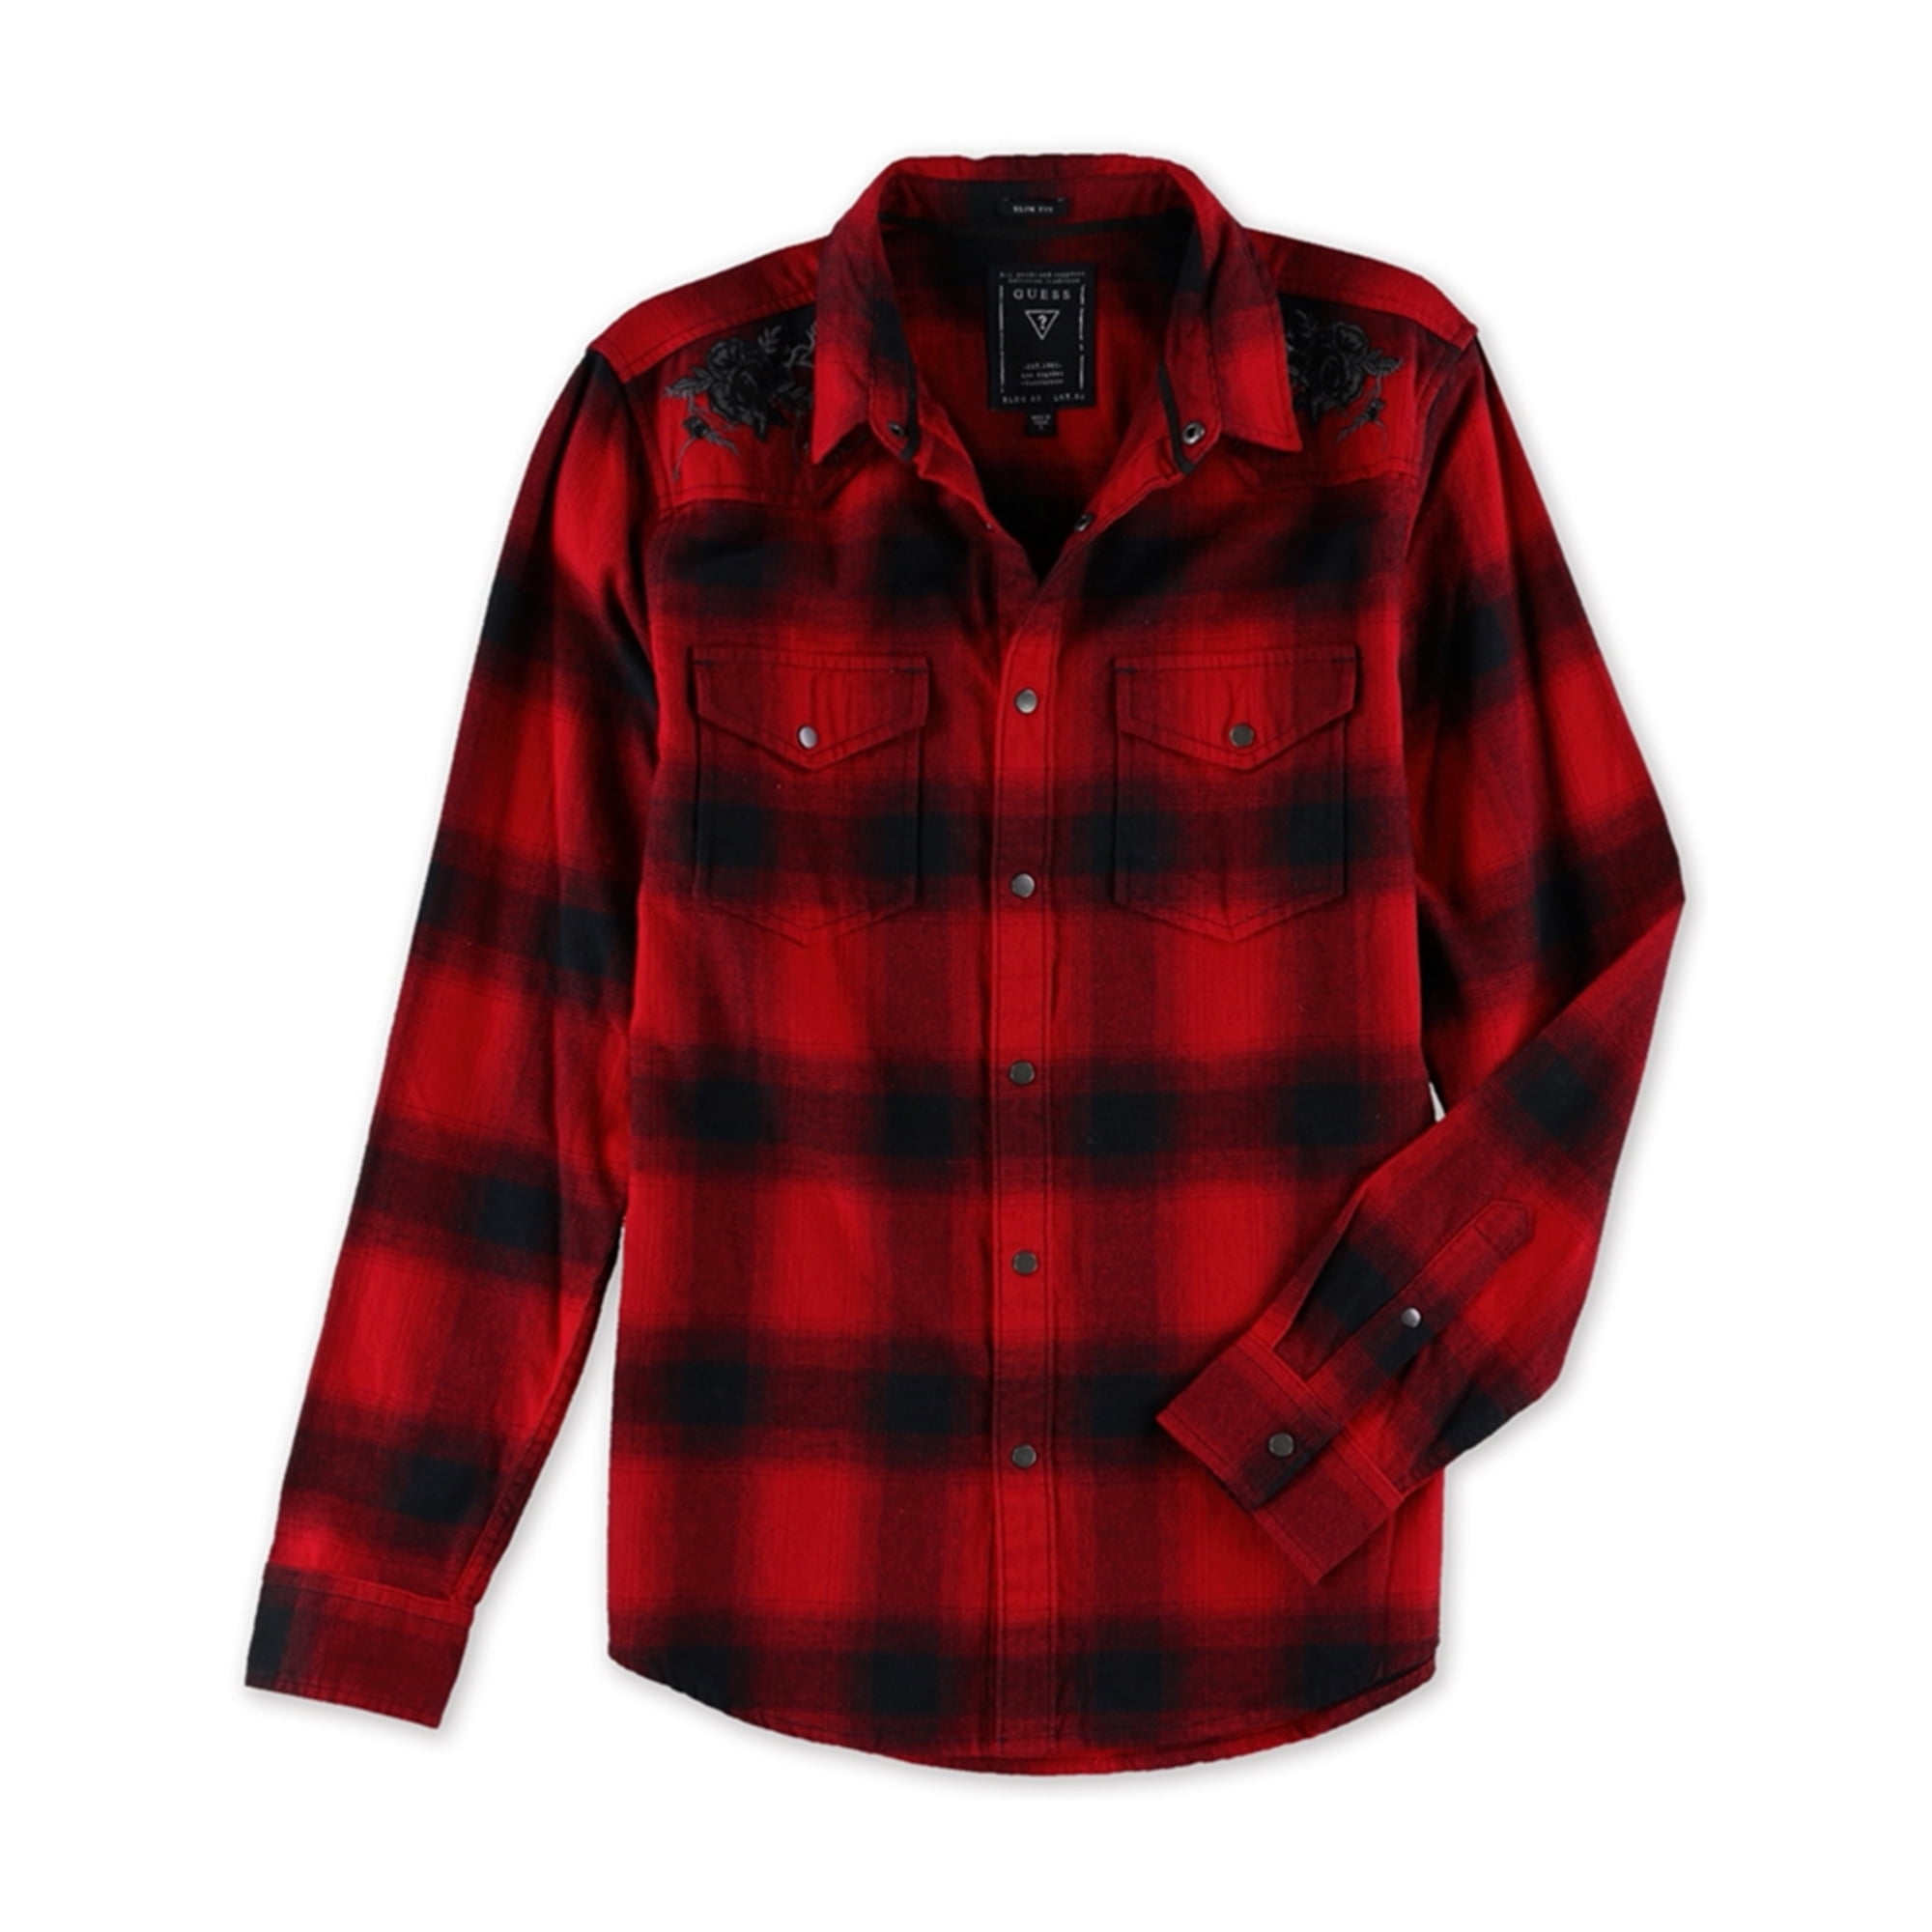 GUESS - GUESS Mens Plaid Button Up Shirt, Red, Large - Walmart.com ...